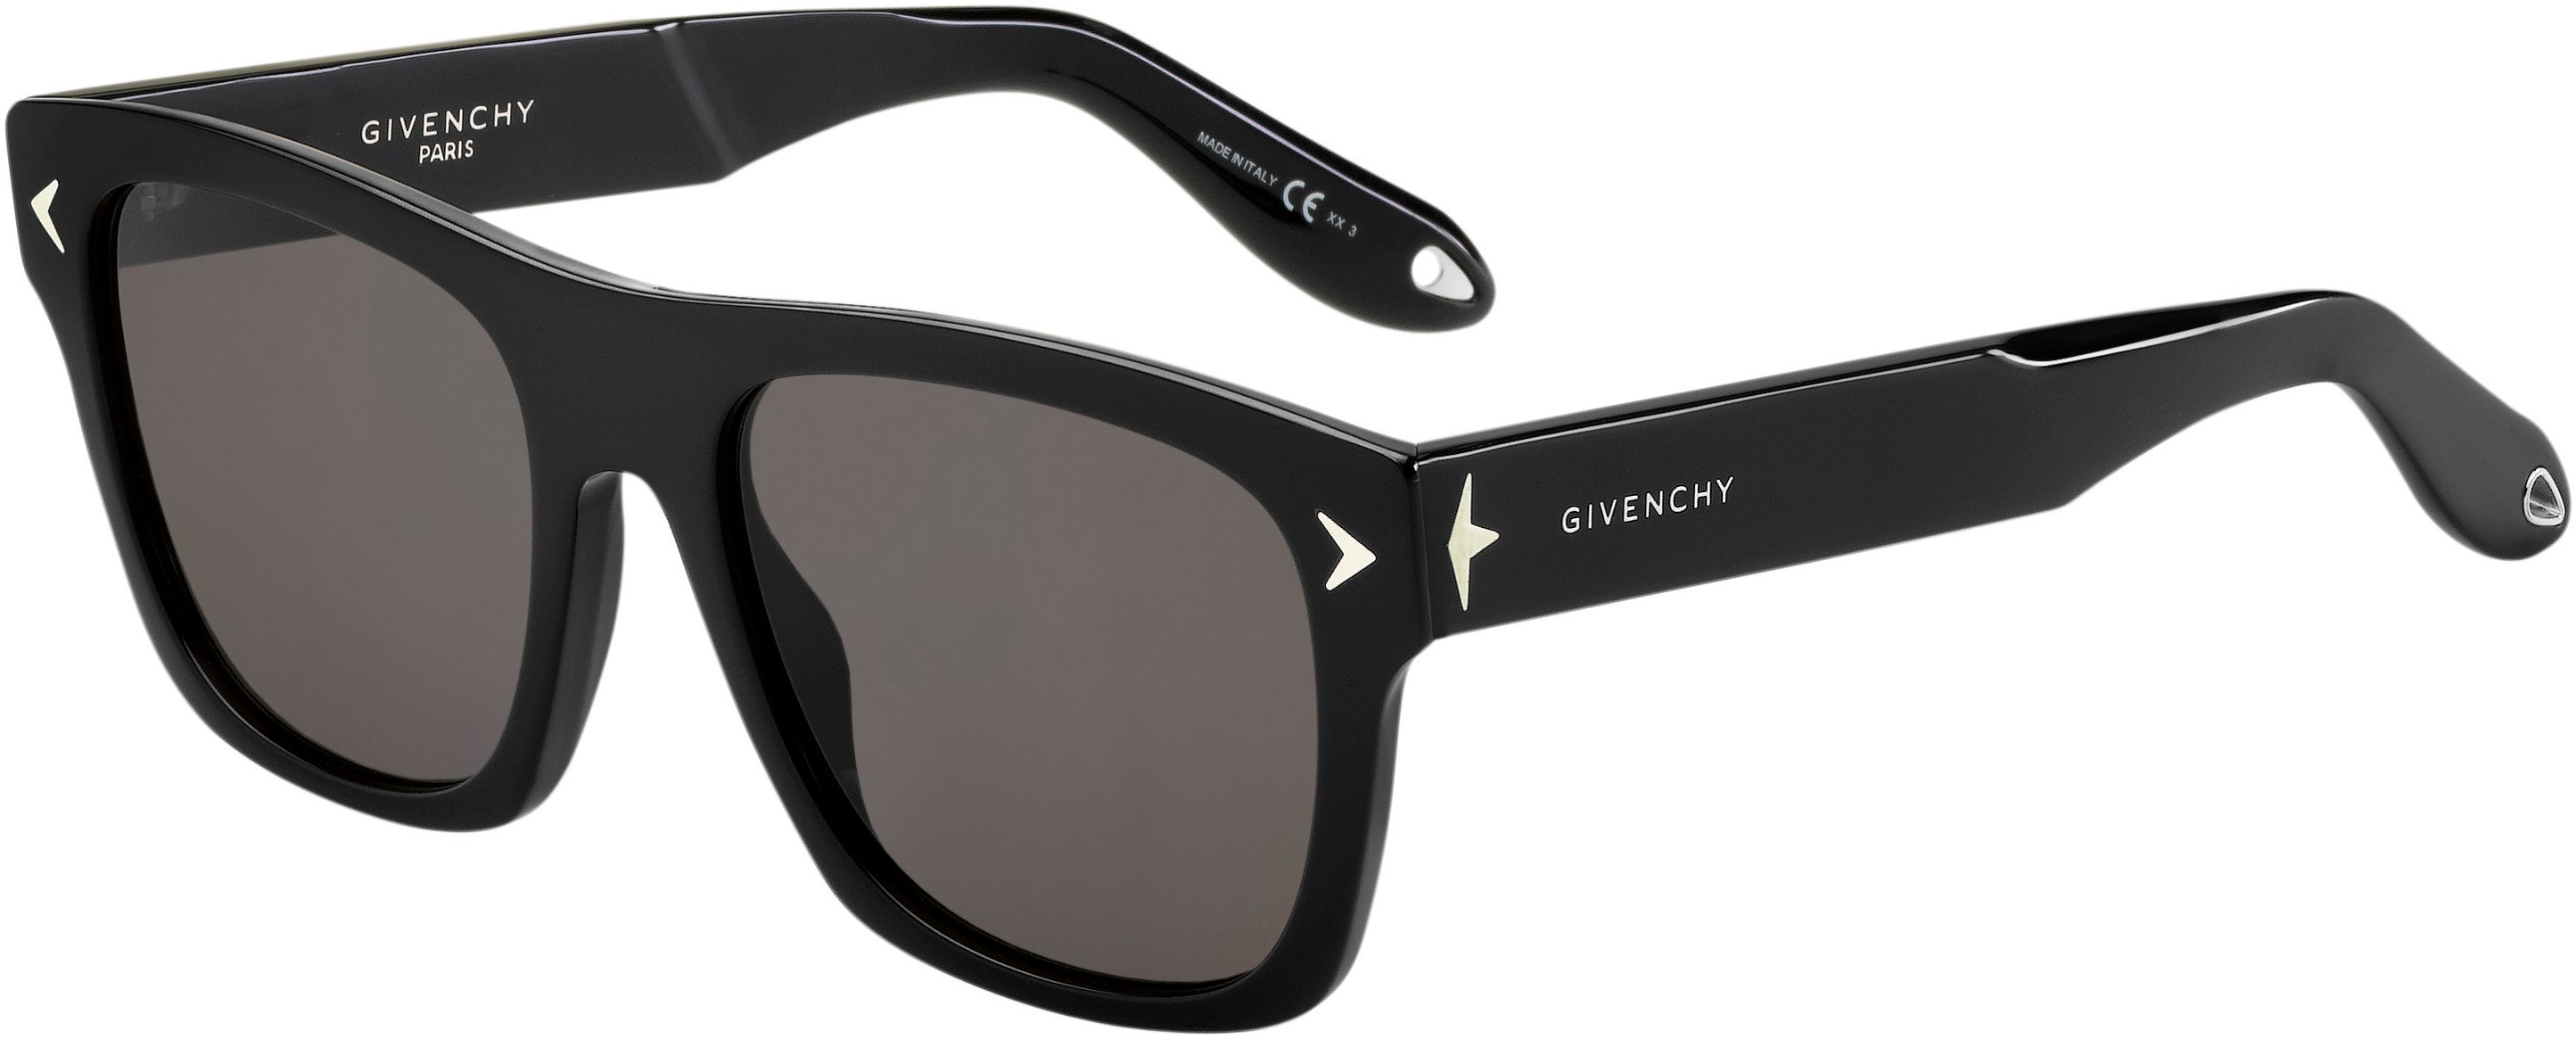  Givenchy 7011/S Rectangular Sunglasses 0807-0807  Black (NR Brown Gray)